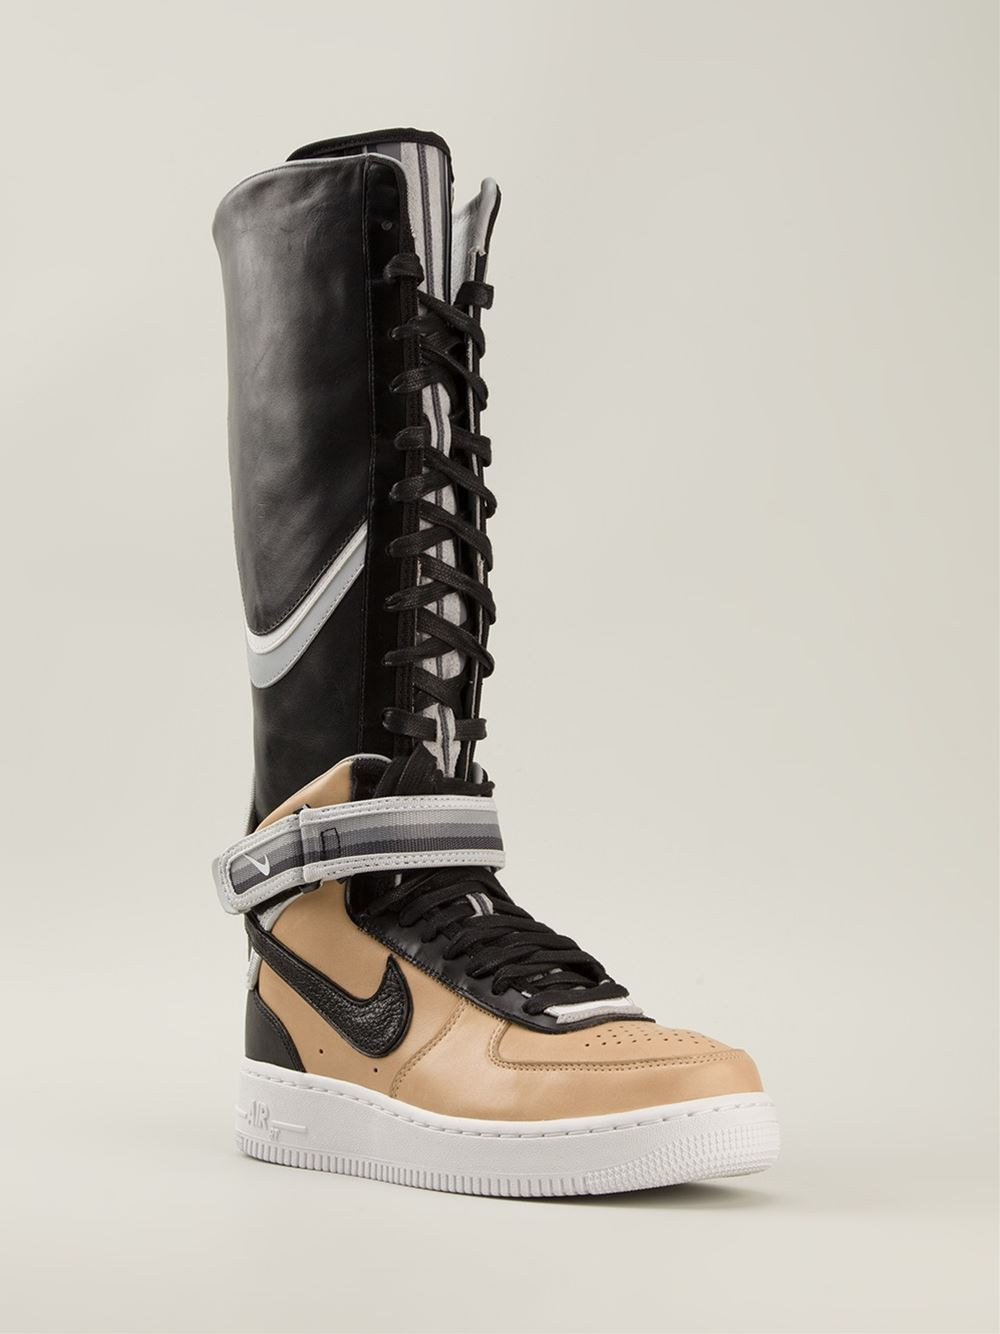 Nike Riccardo Tisci 'beige Pack Air Force 1' Boots in Brown (Black) - Lyst